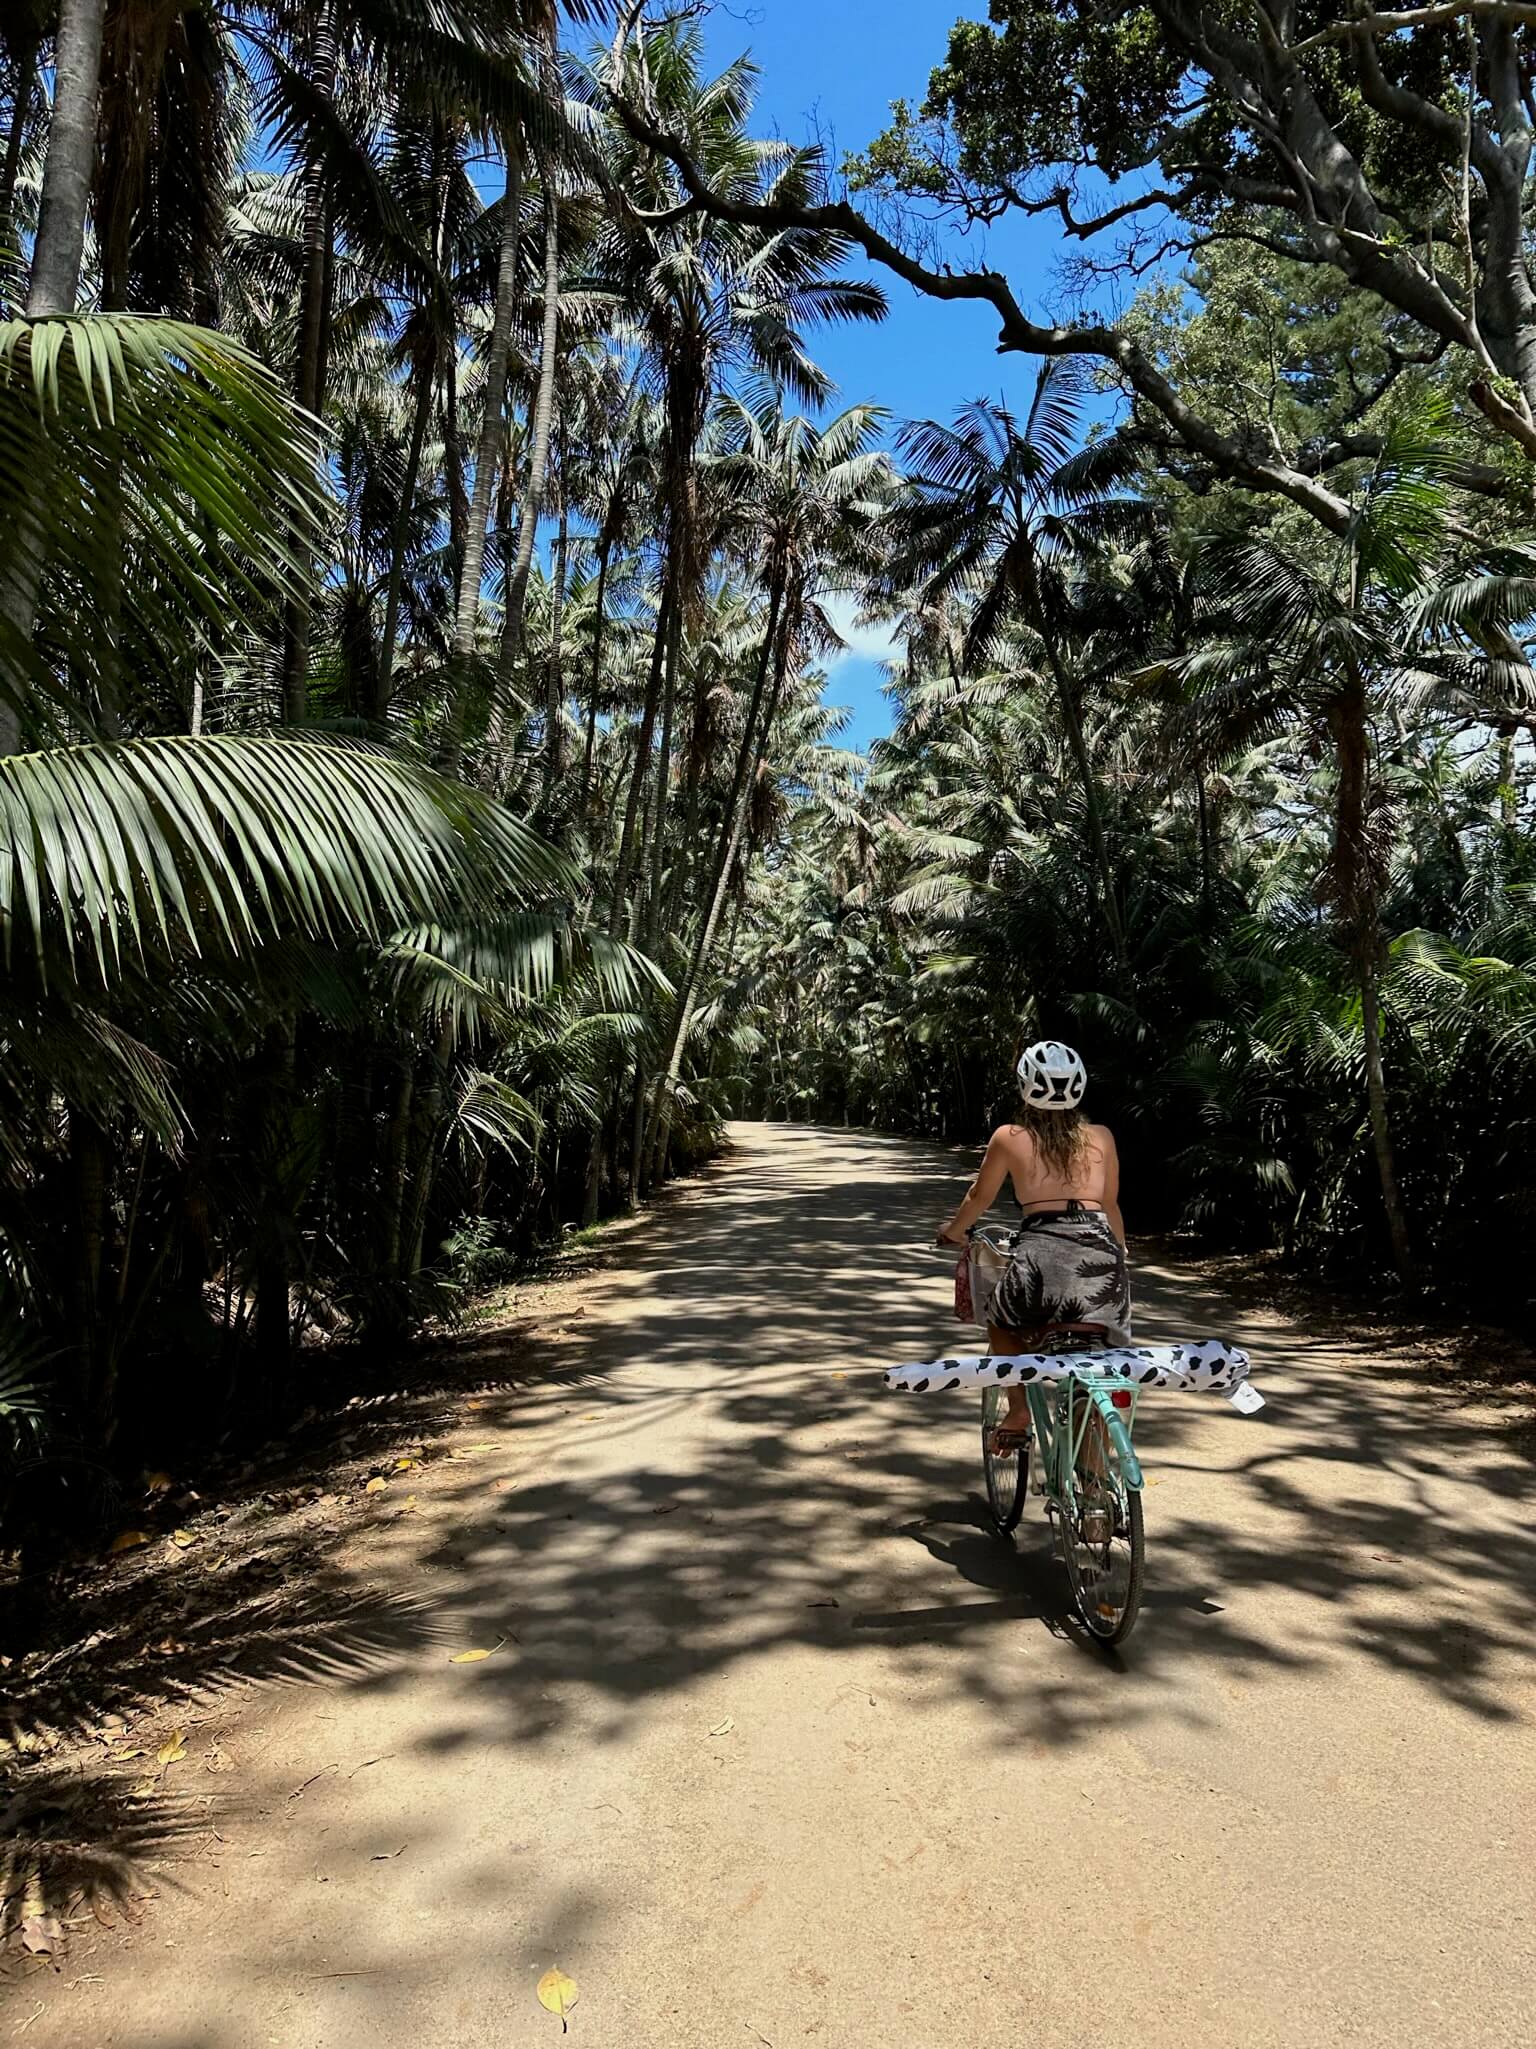 Back of female riding bike in an island landscape